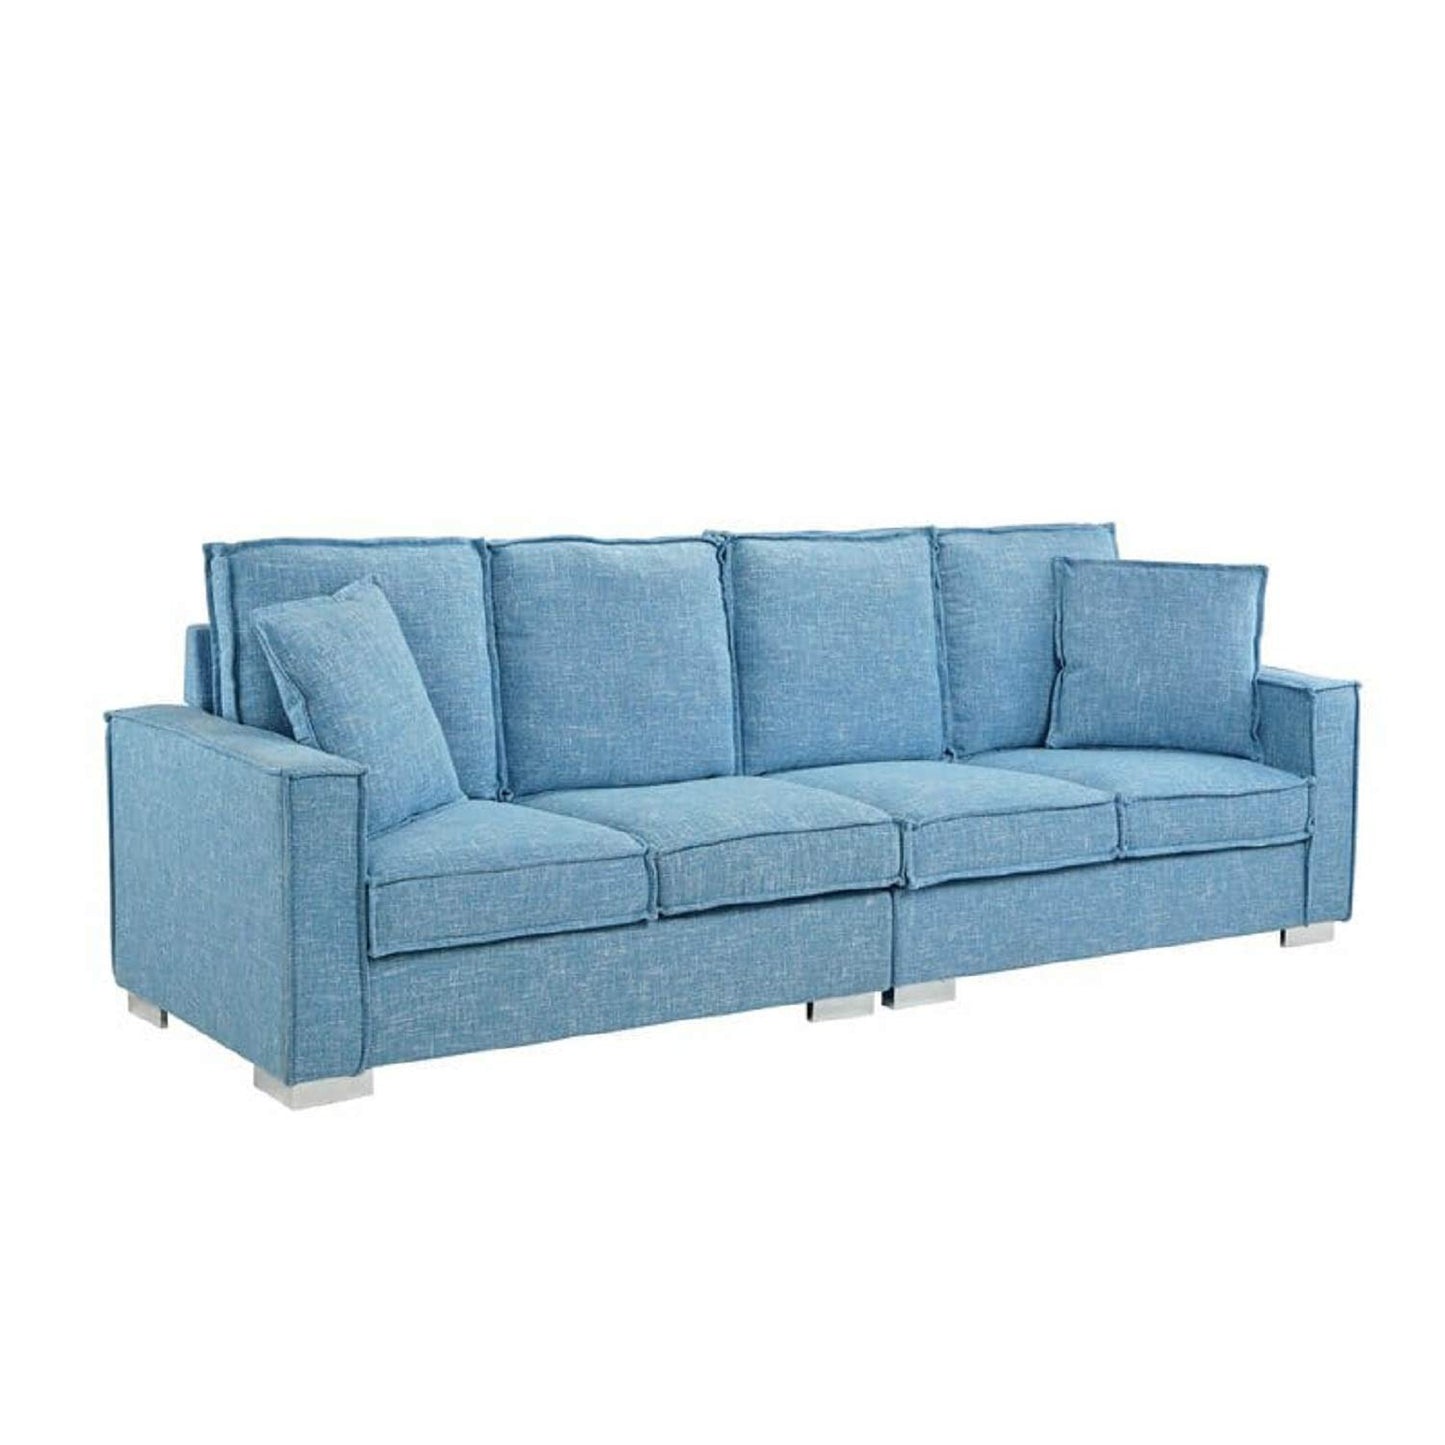 Designer Sofa Set:- 4 Seater Fabric Luxury Furniture Sofa Set (Light Blue)